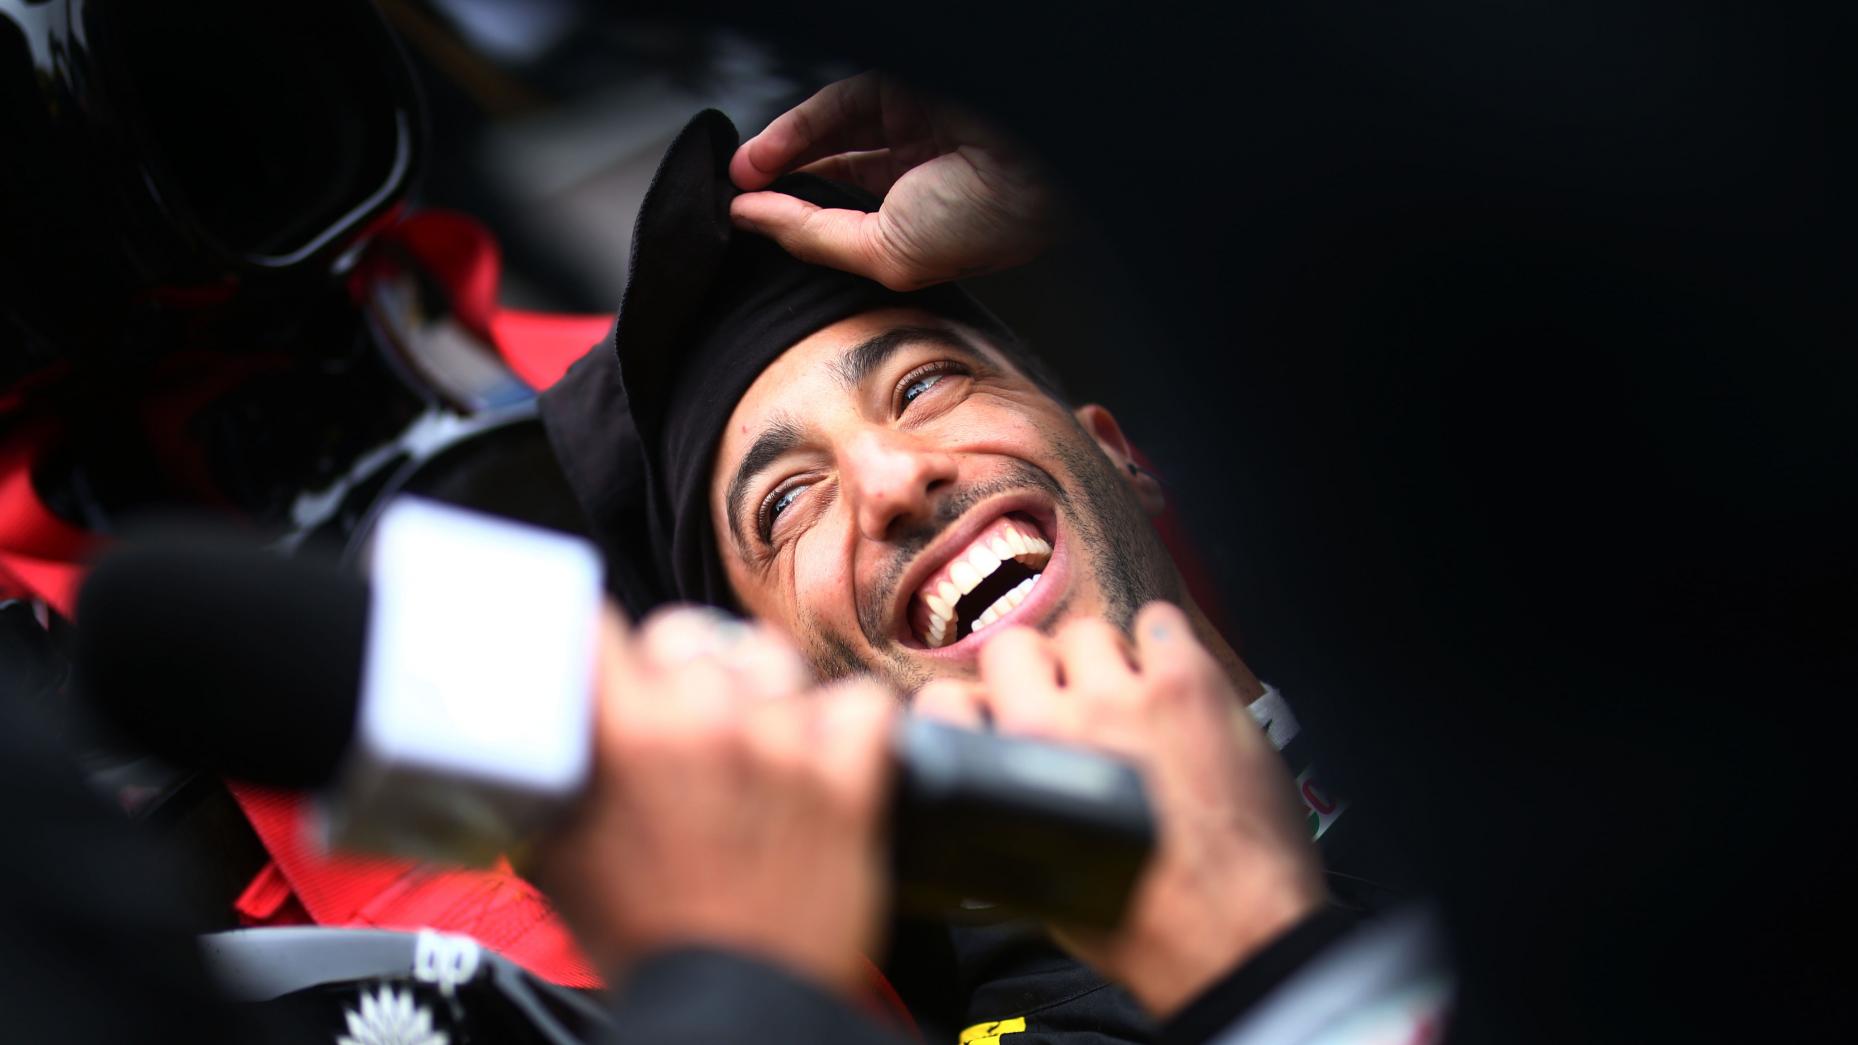 10. A Daniel Ricciardo